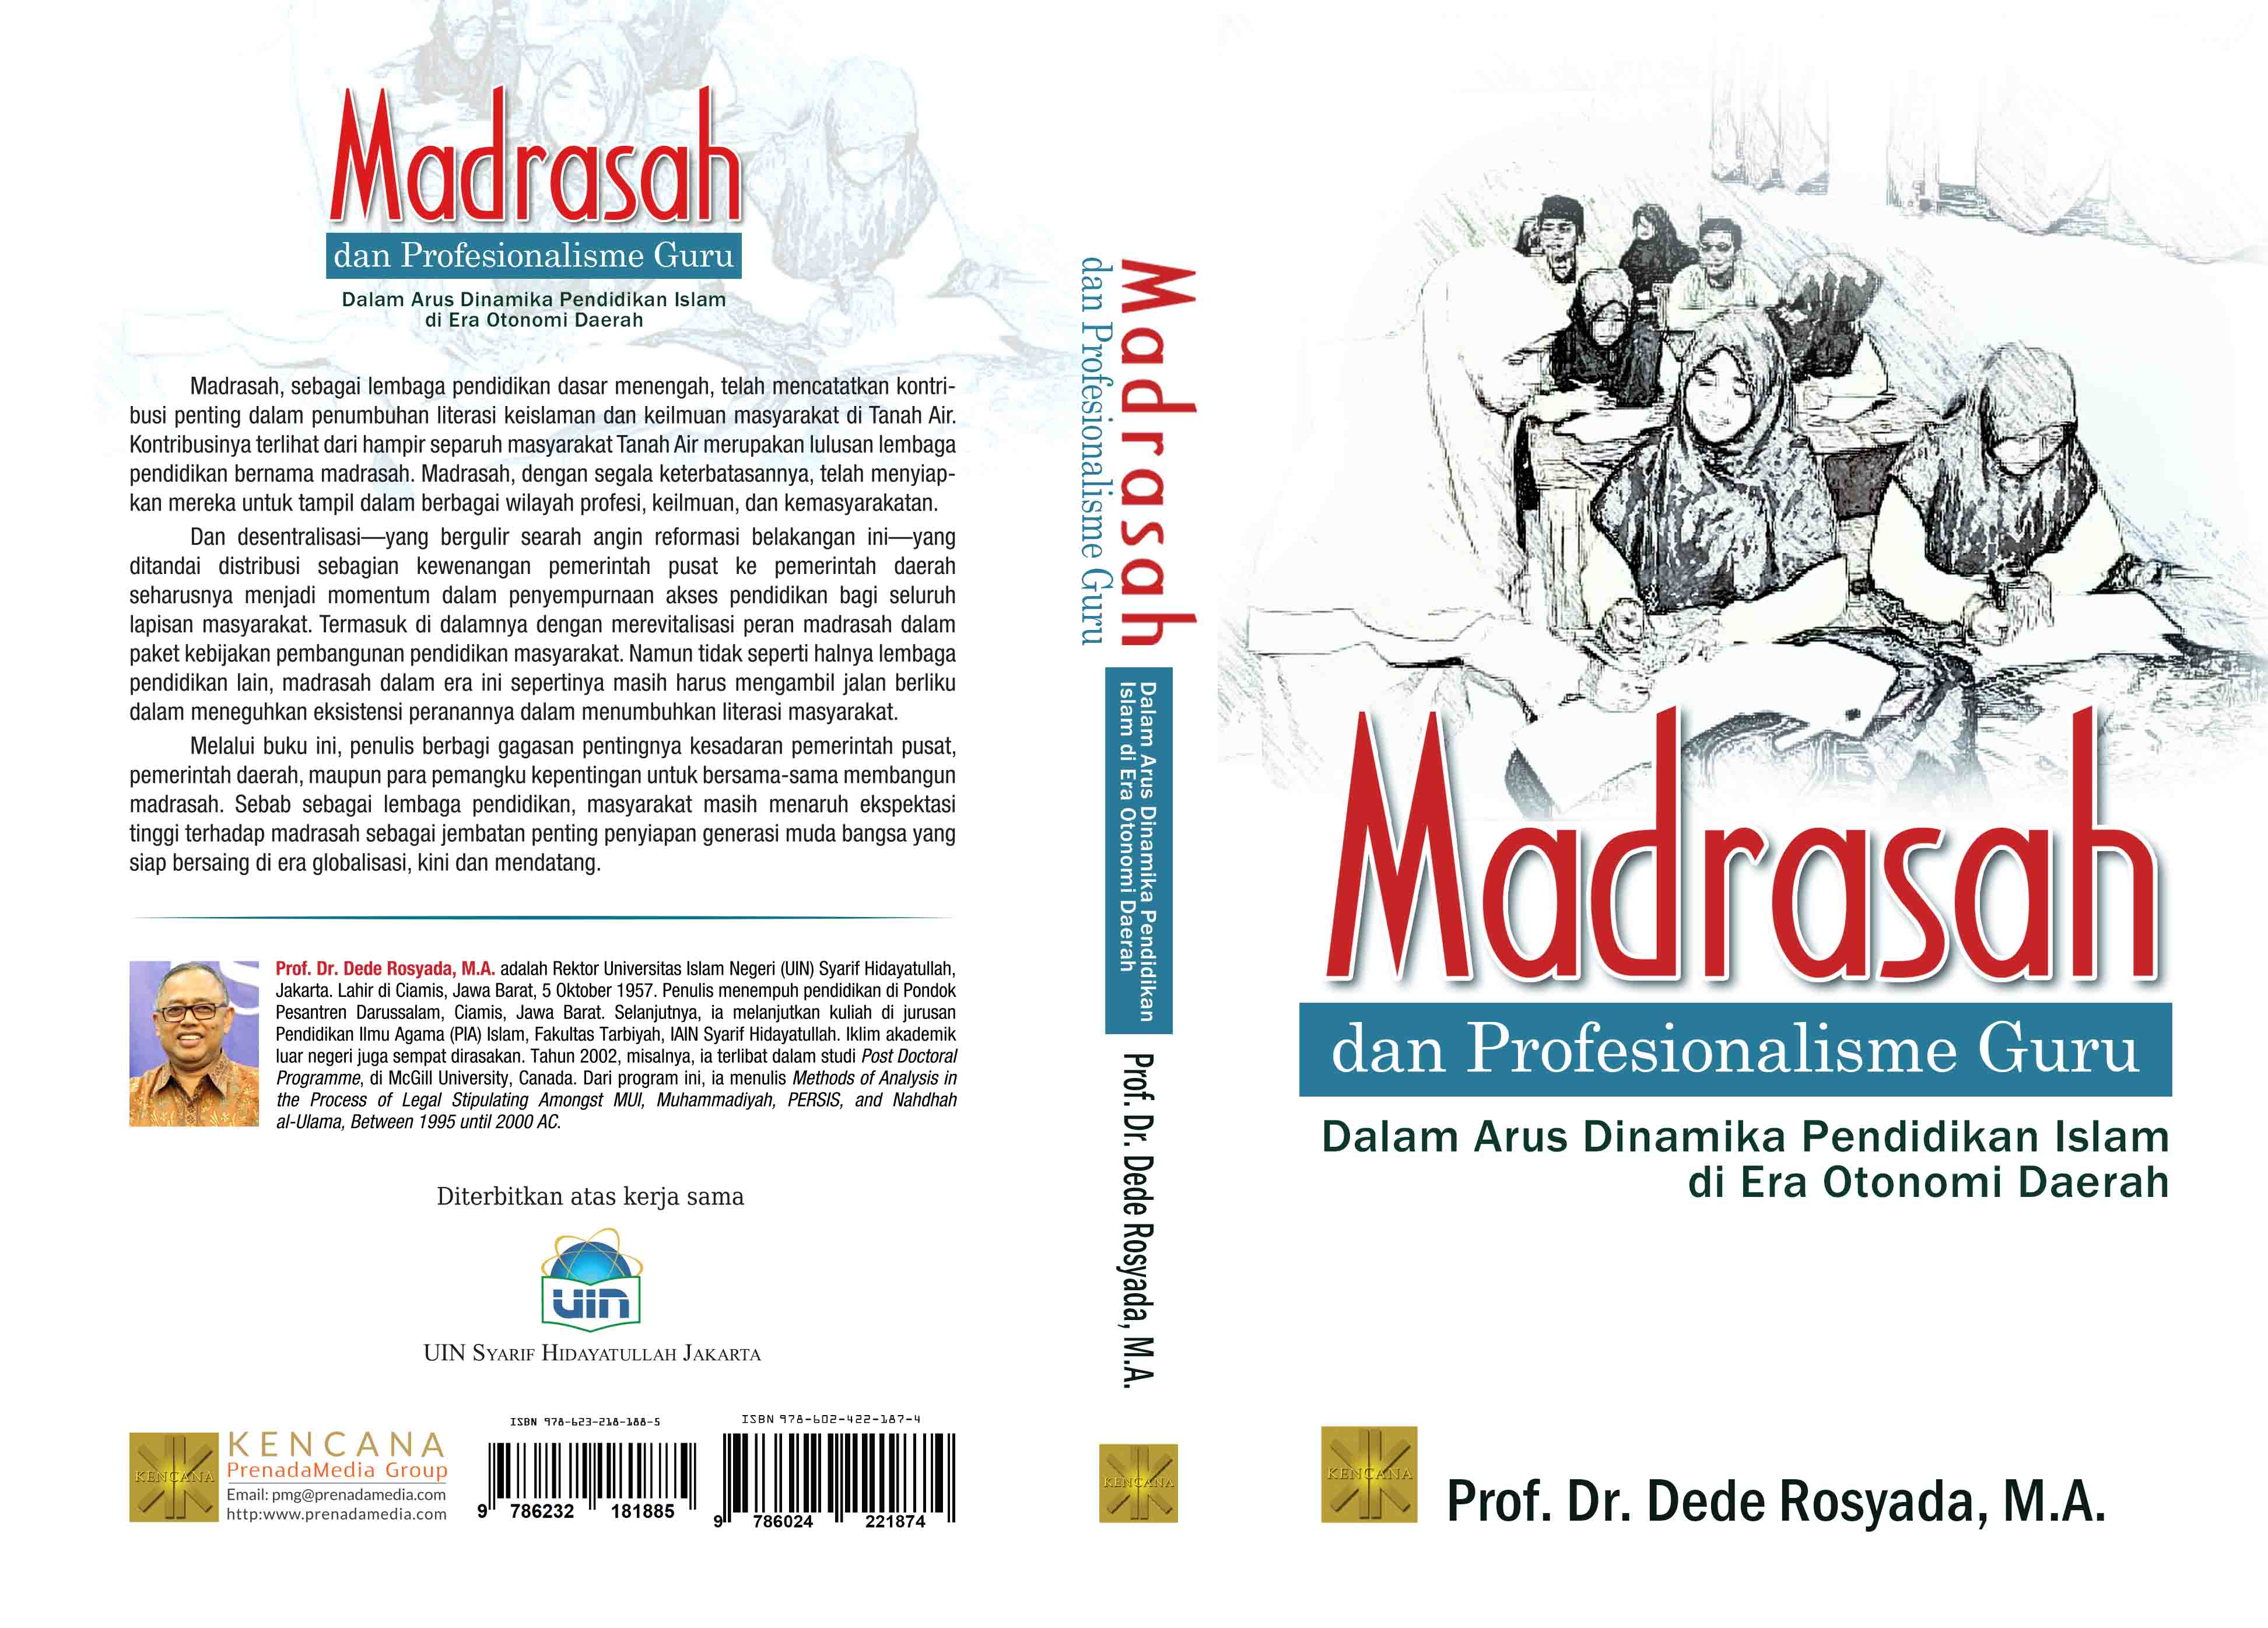 Madrasah dan profesionalisme guru dalam arus dinamika pendidikan Islam di era otonomi daerah [sumber elektronis]